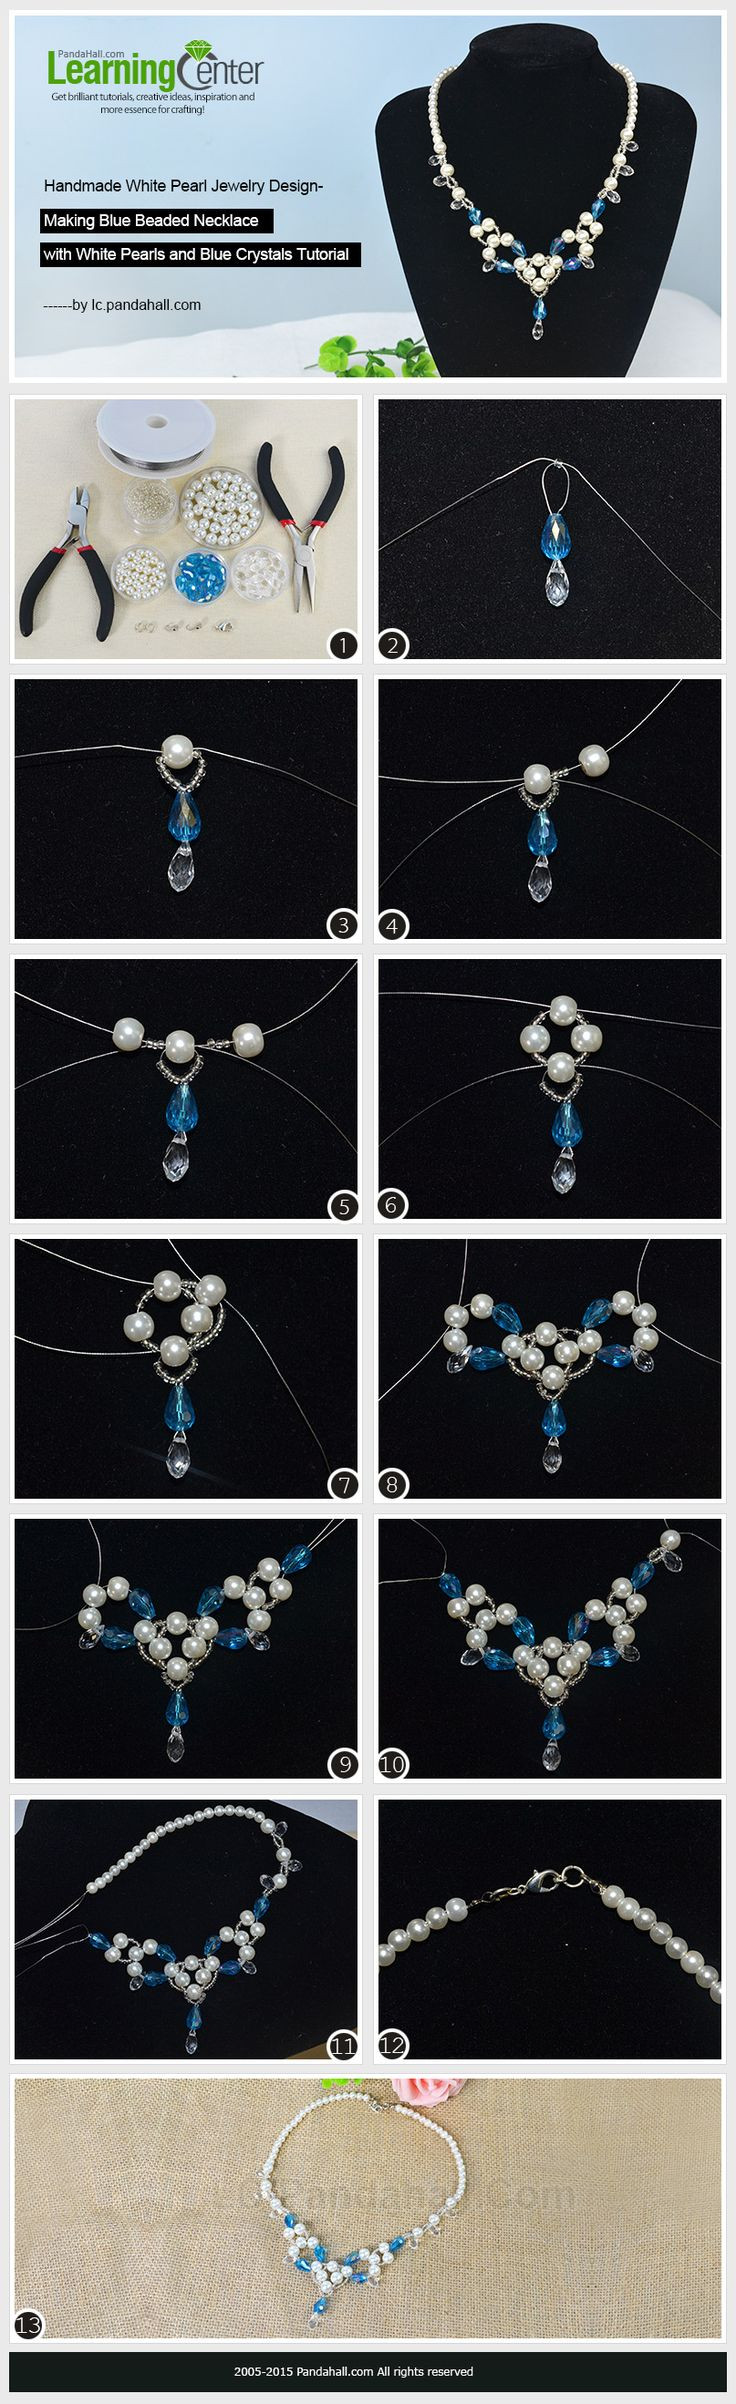 Handmade White Pearl Jewelry Design-Making Blue Be...